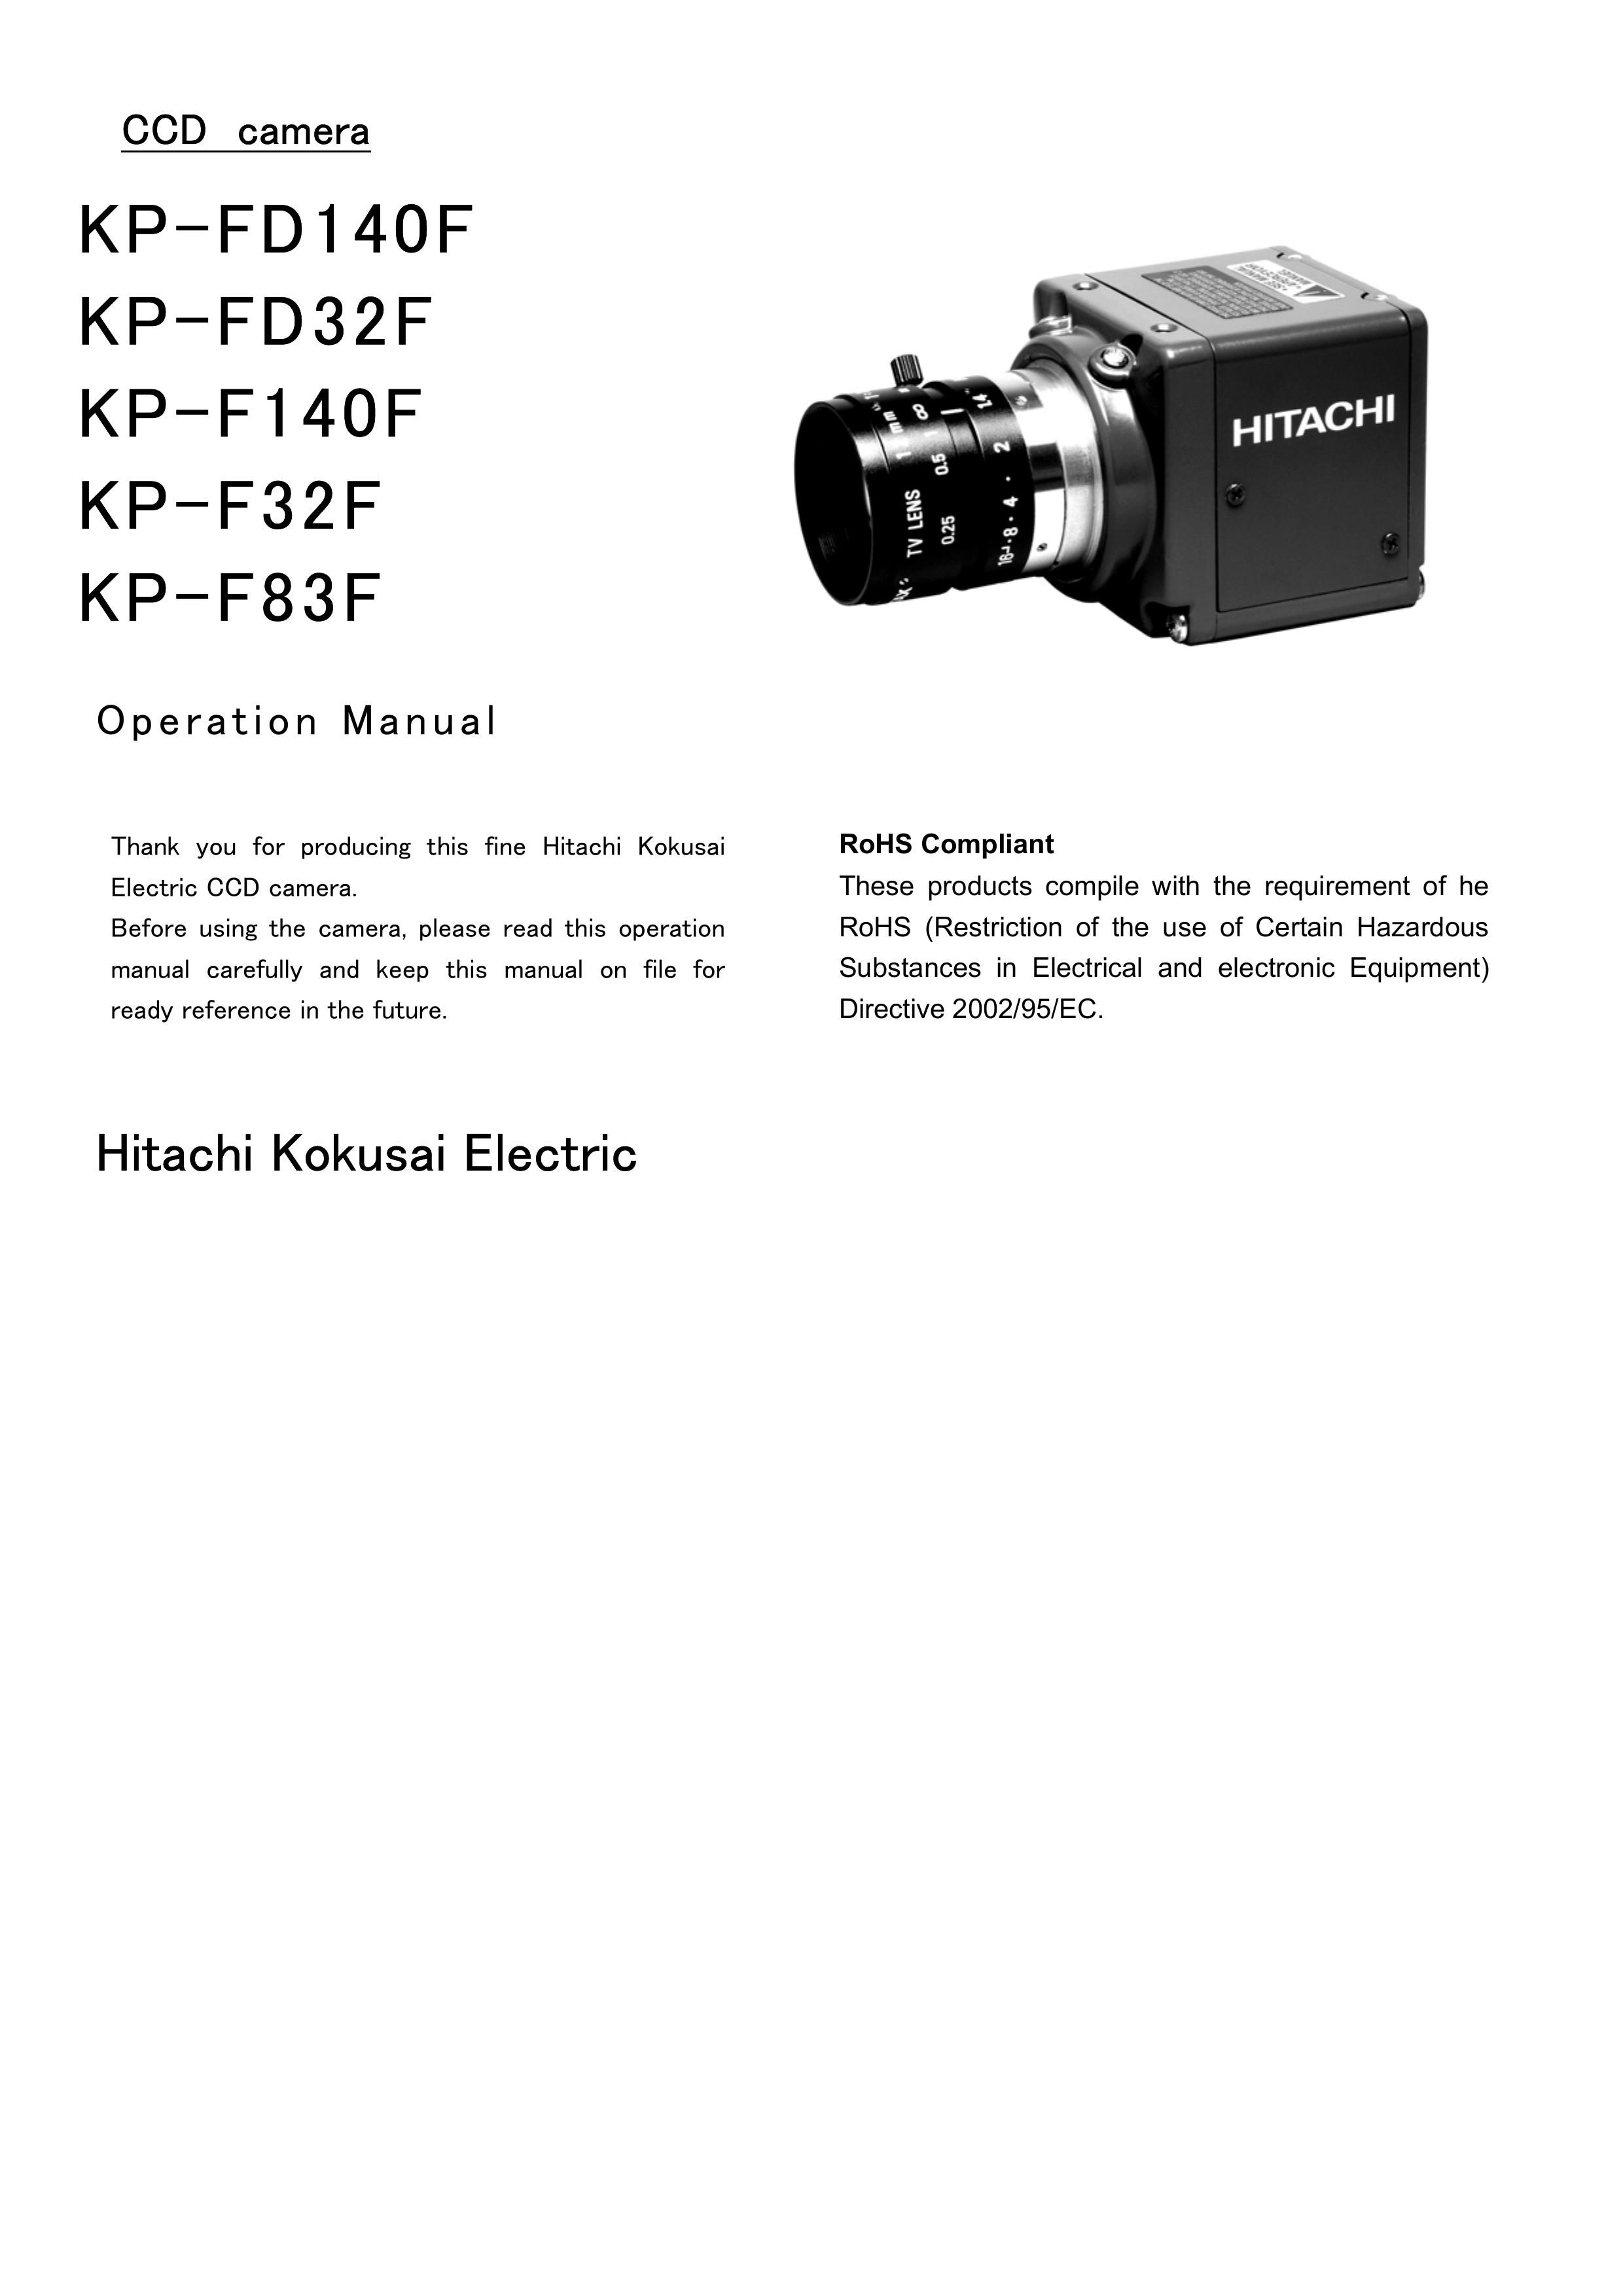 Hitachi KP-FD140F Digital Camera User Manual